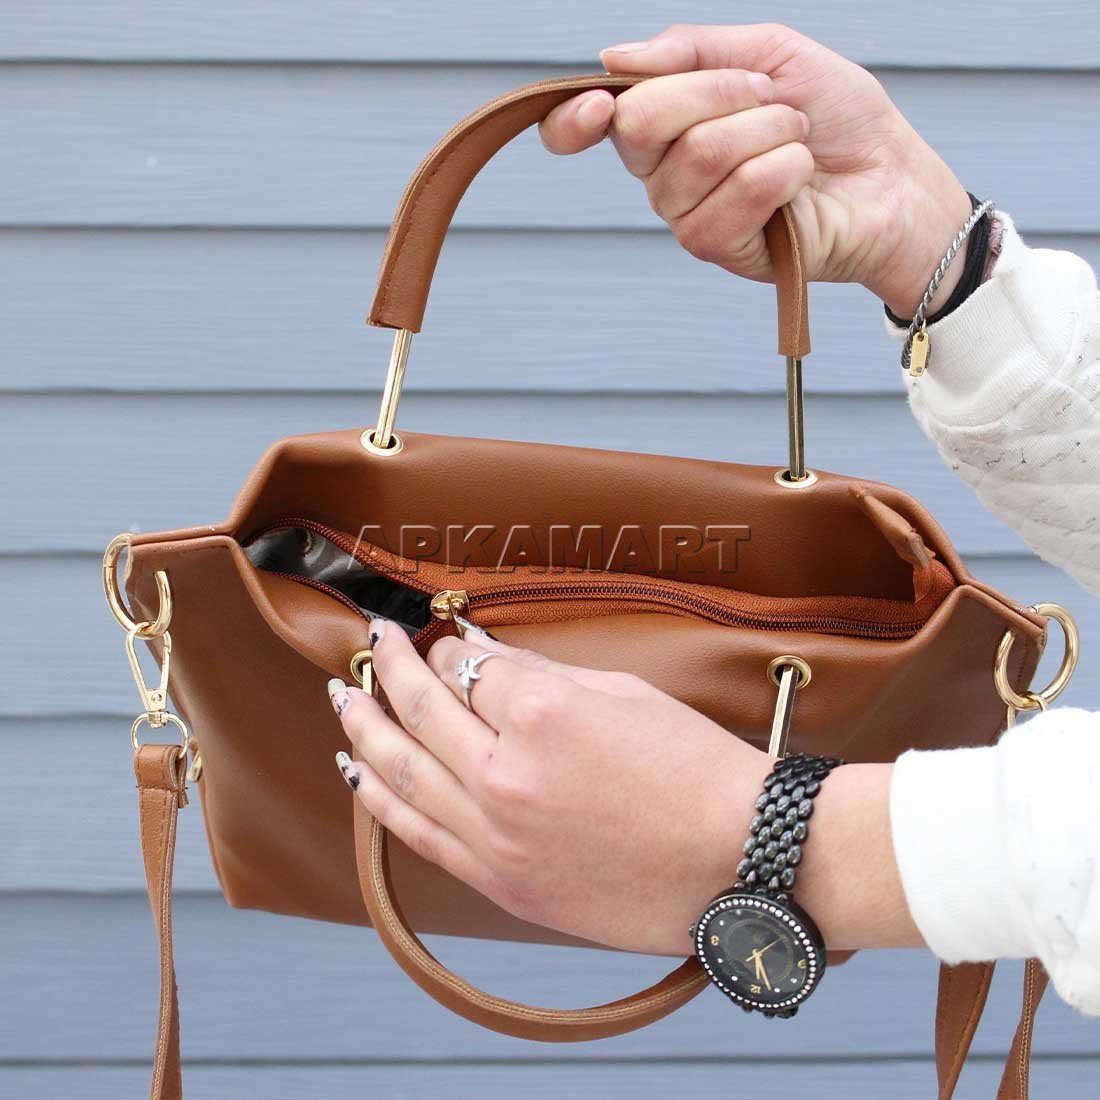 apkamart women s style handbag 8 inch 14458021249120